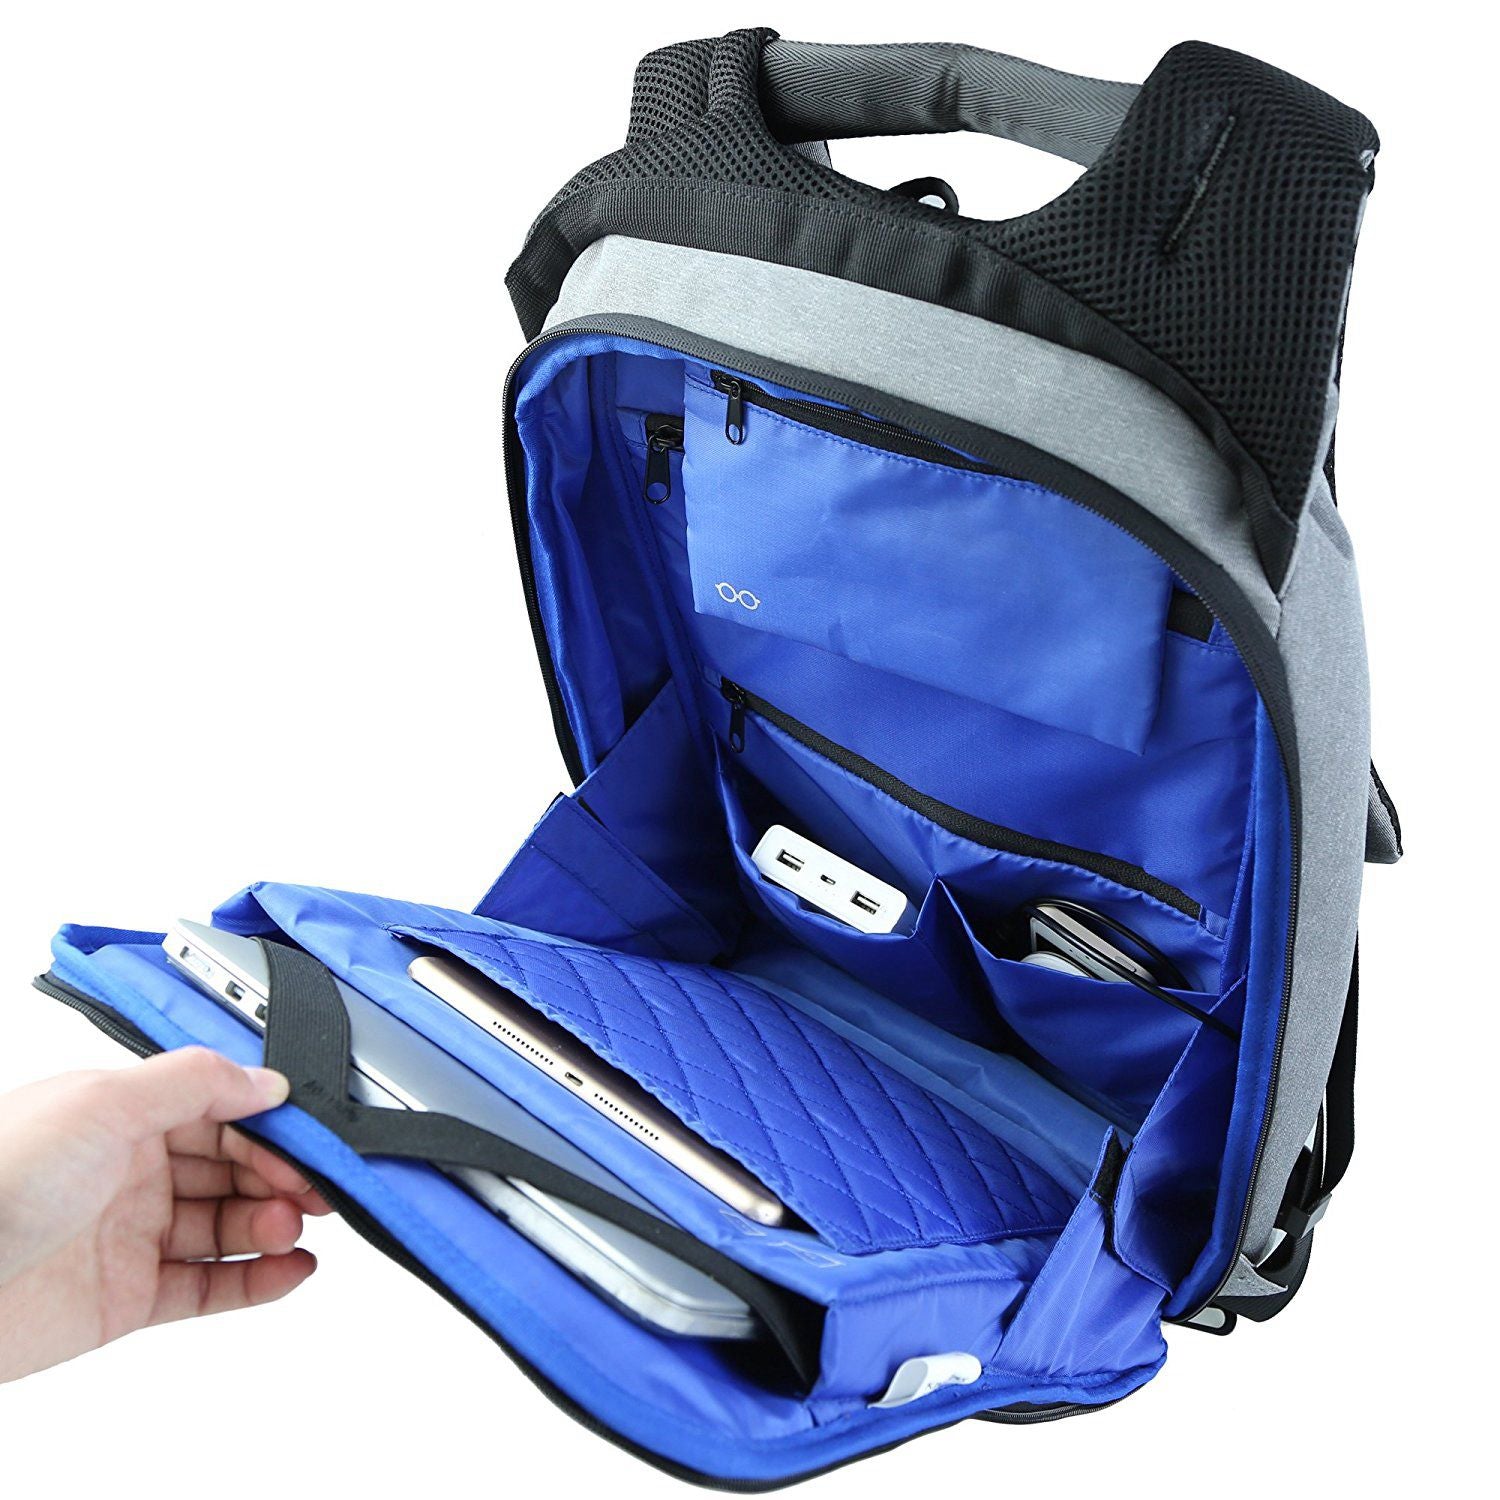 Kingsons Anti-Theft 15.6 inch USB Charging Backapcks School Backpack Bag Laptop Computer Bags Men's Women's Travel Bags - ebowsos